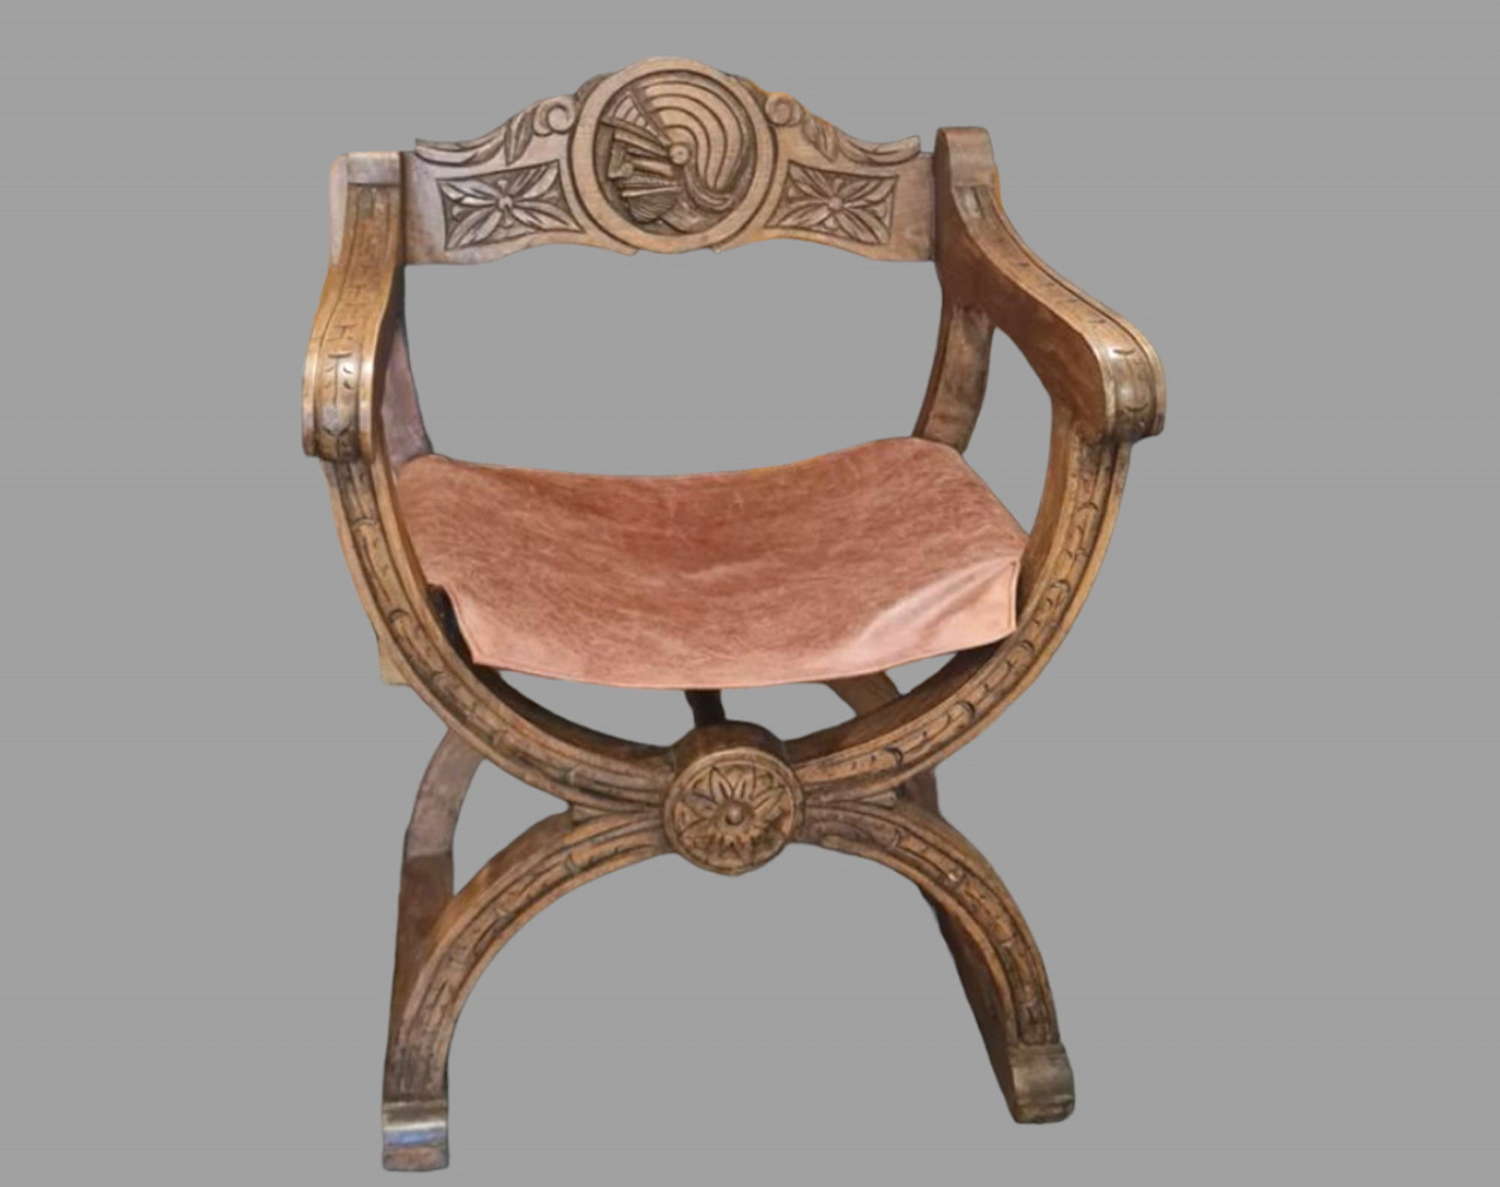 A Cross Frame Savonarola Chair